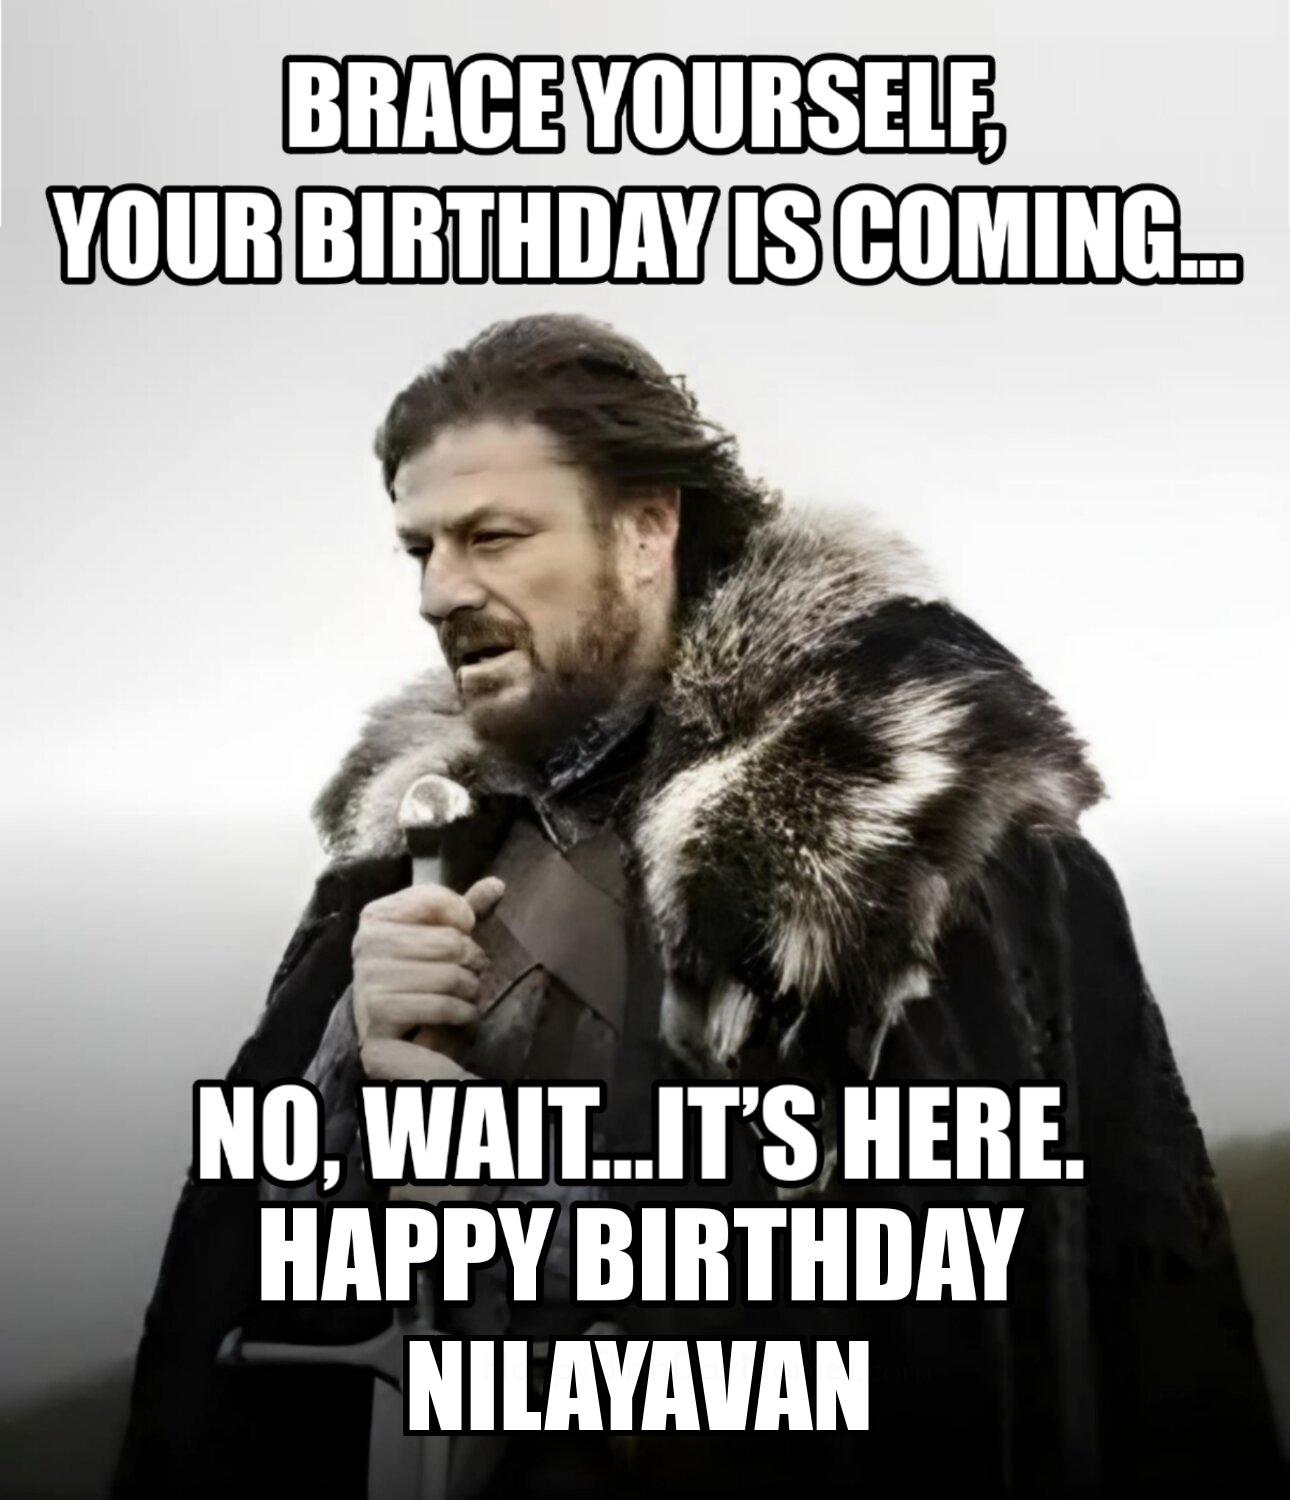 Happy Birthday Nilayavan Brace Yourself Your Birthday Is Coming Meme